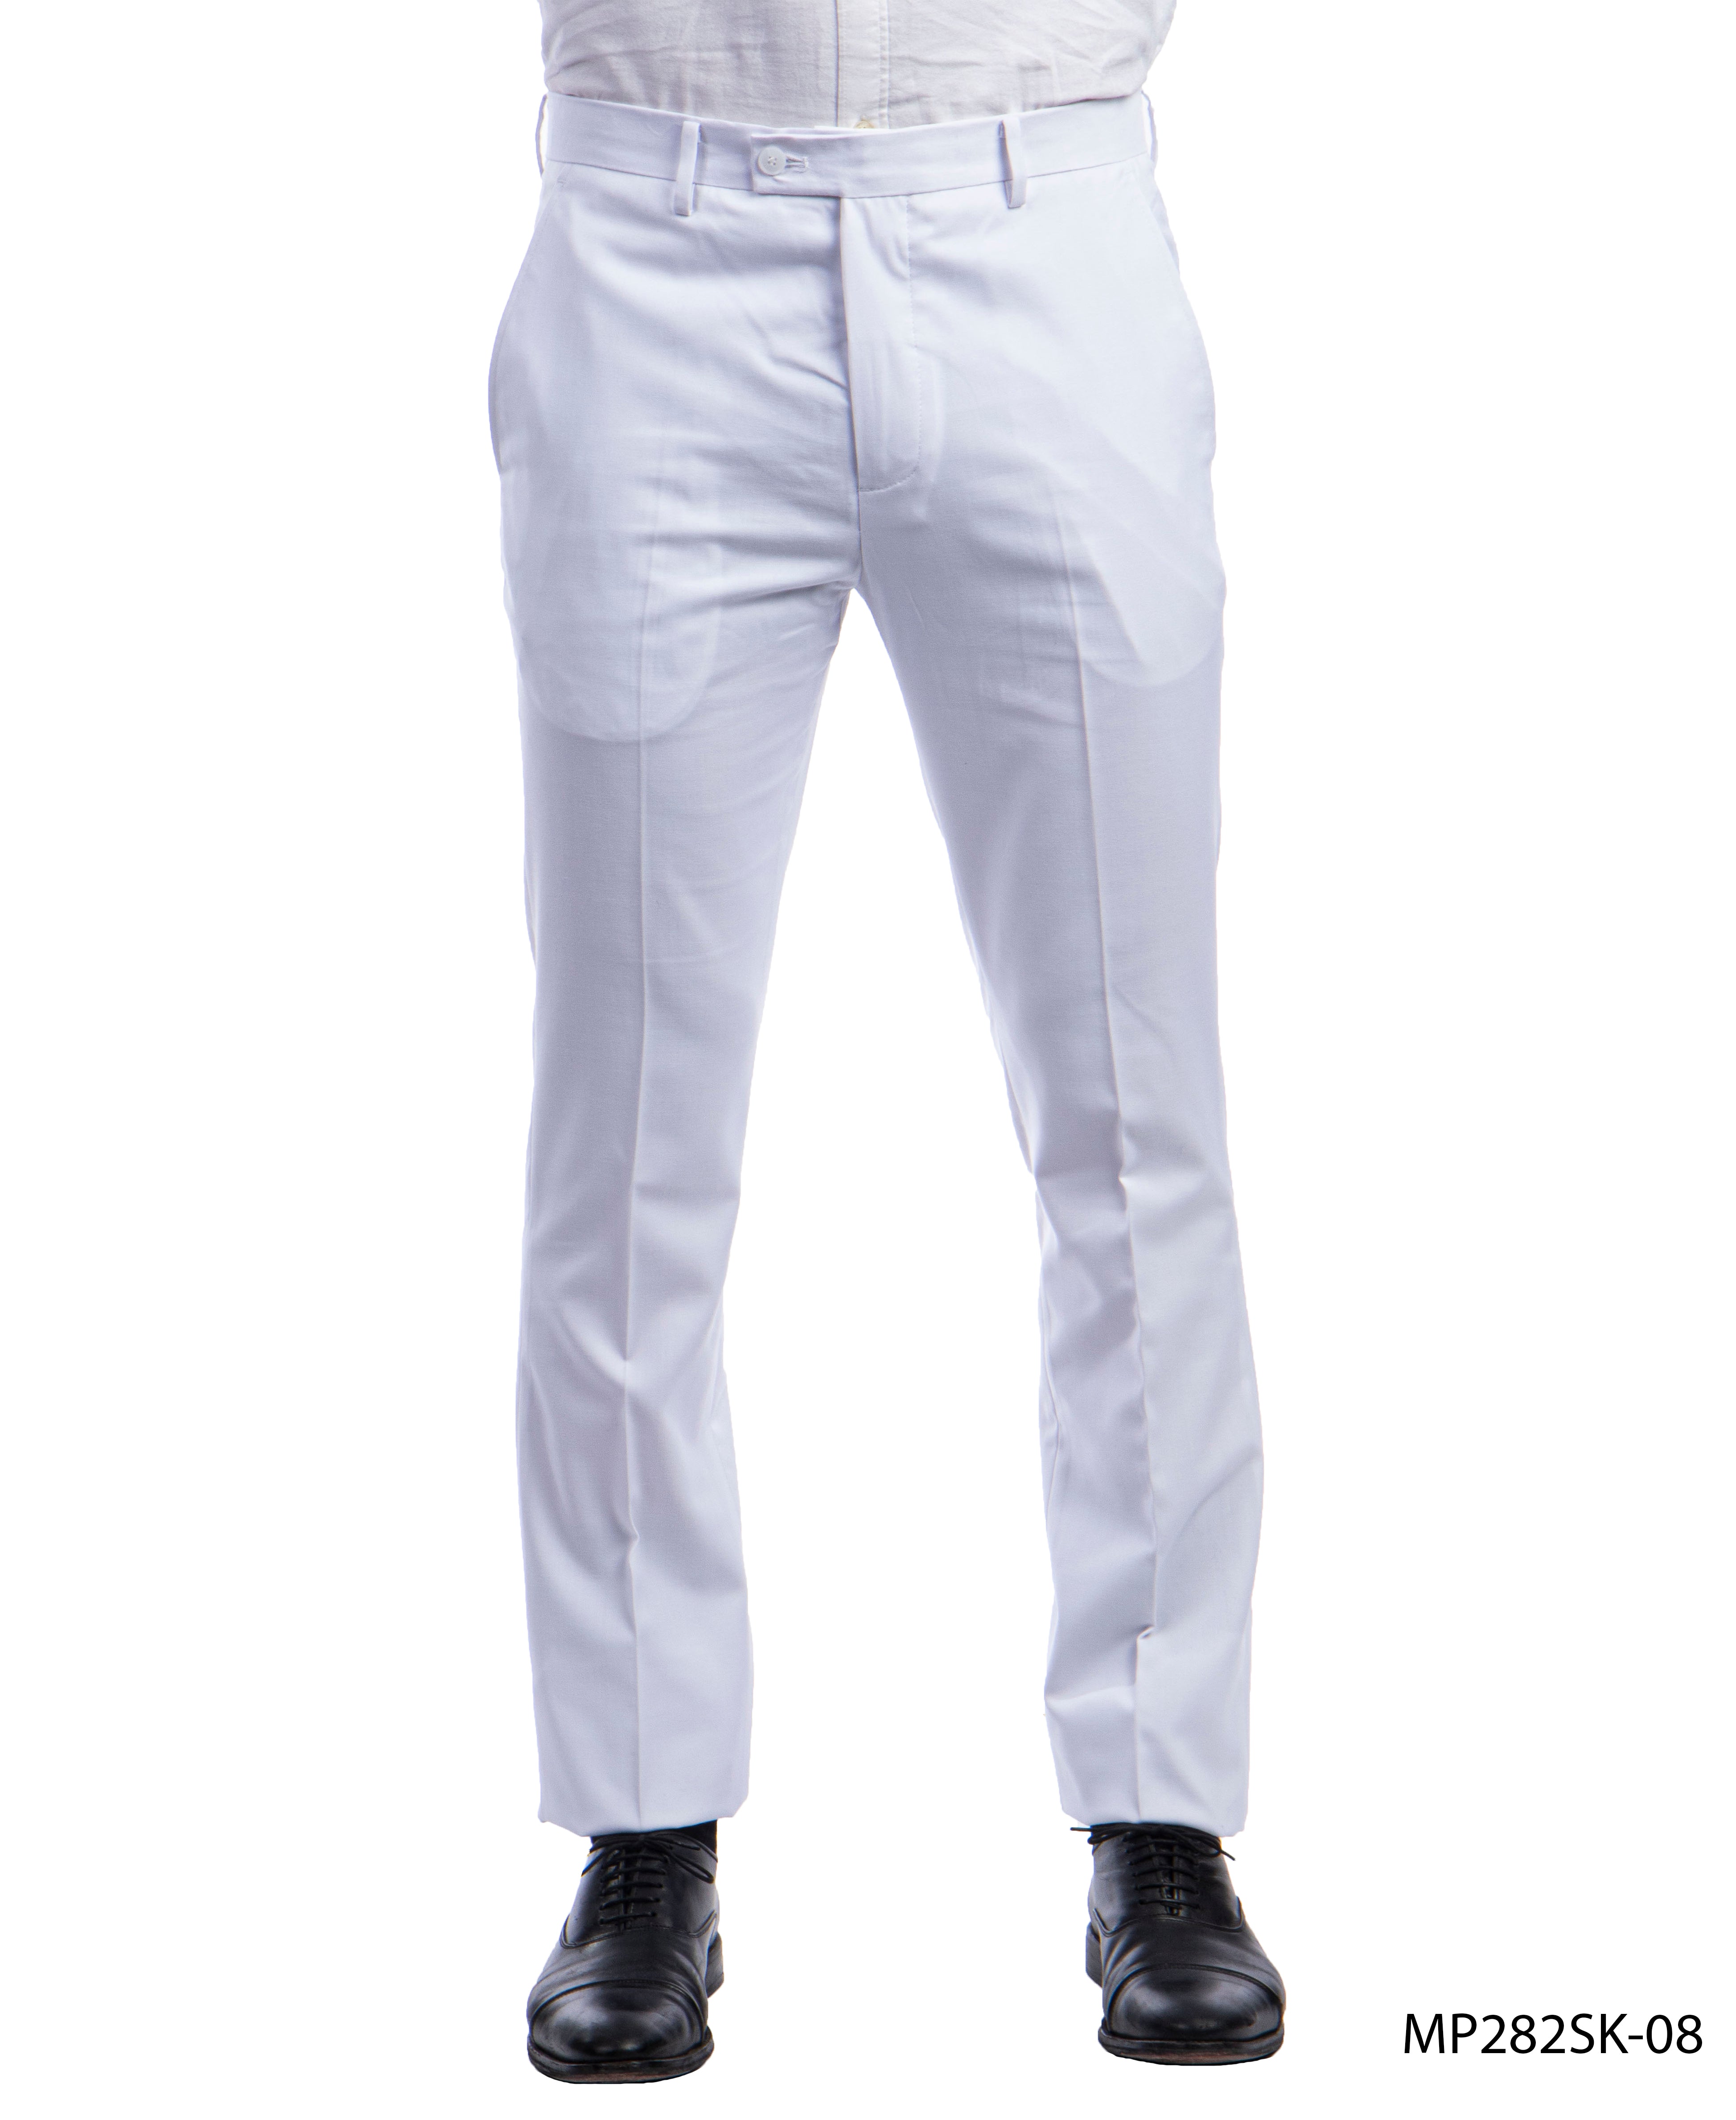 Sean Alexander White Performance Stretch Dress Pants For Men